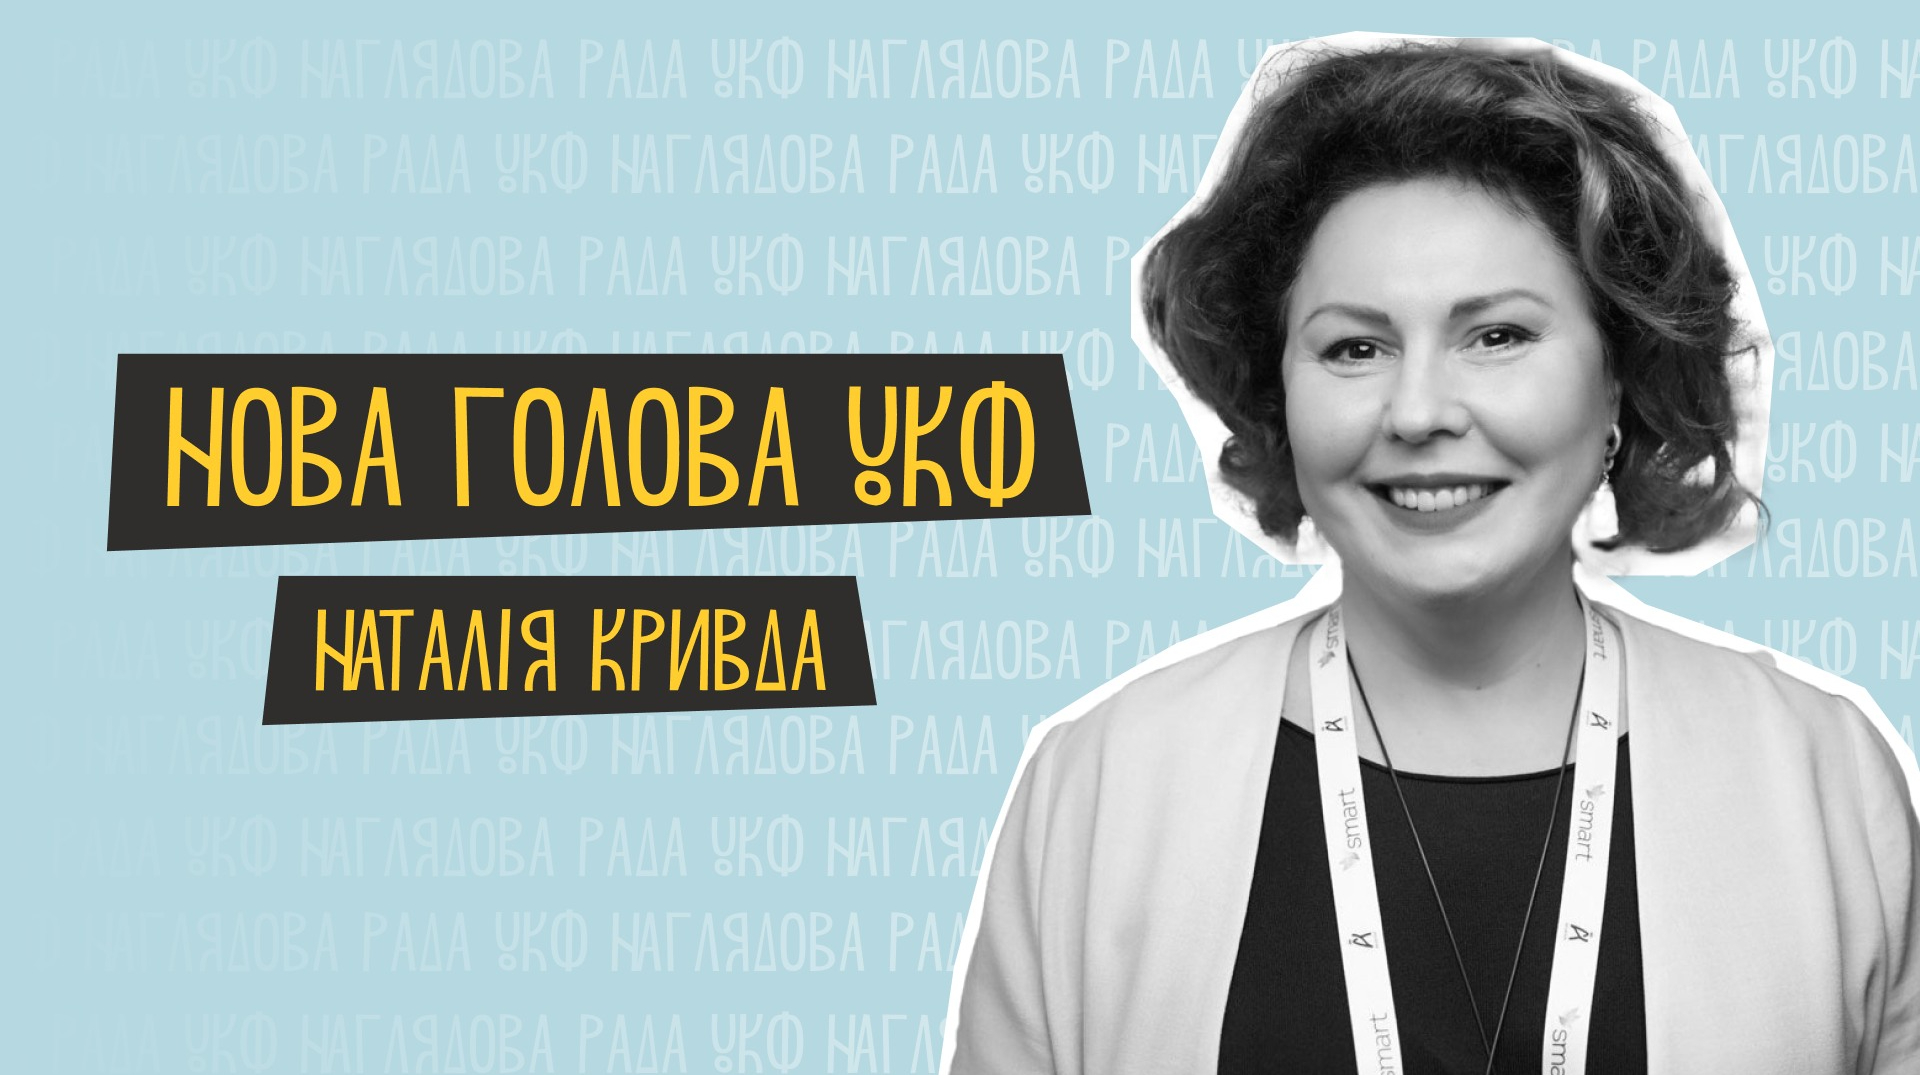 Natalya Kryvda became the head of the Ukrainian Cultural Foundation